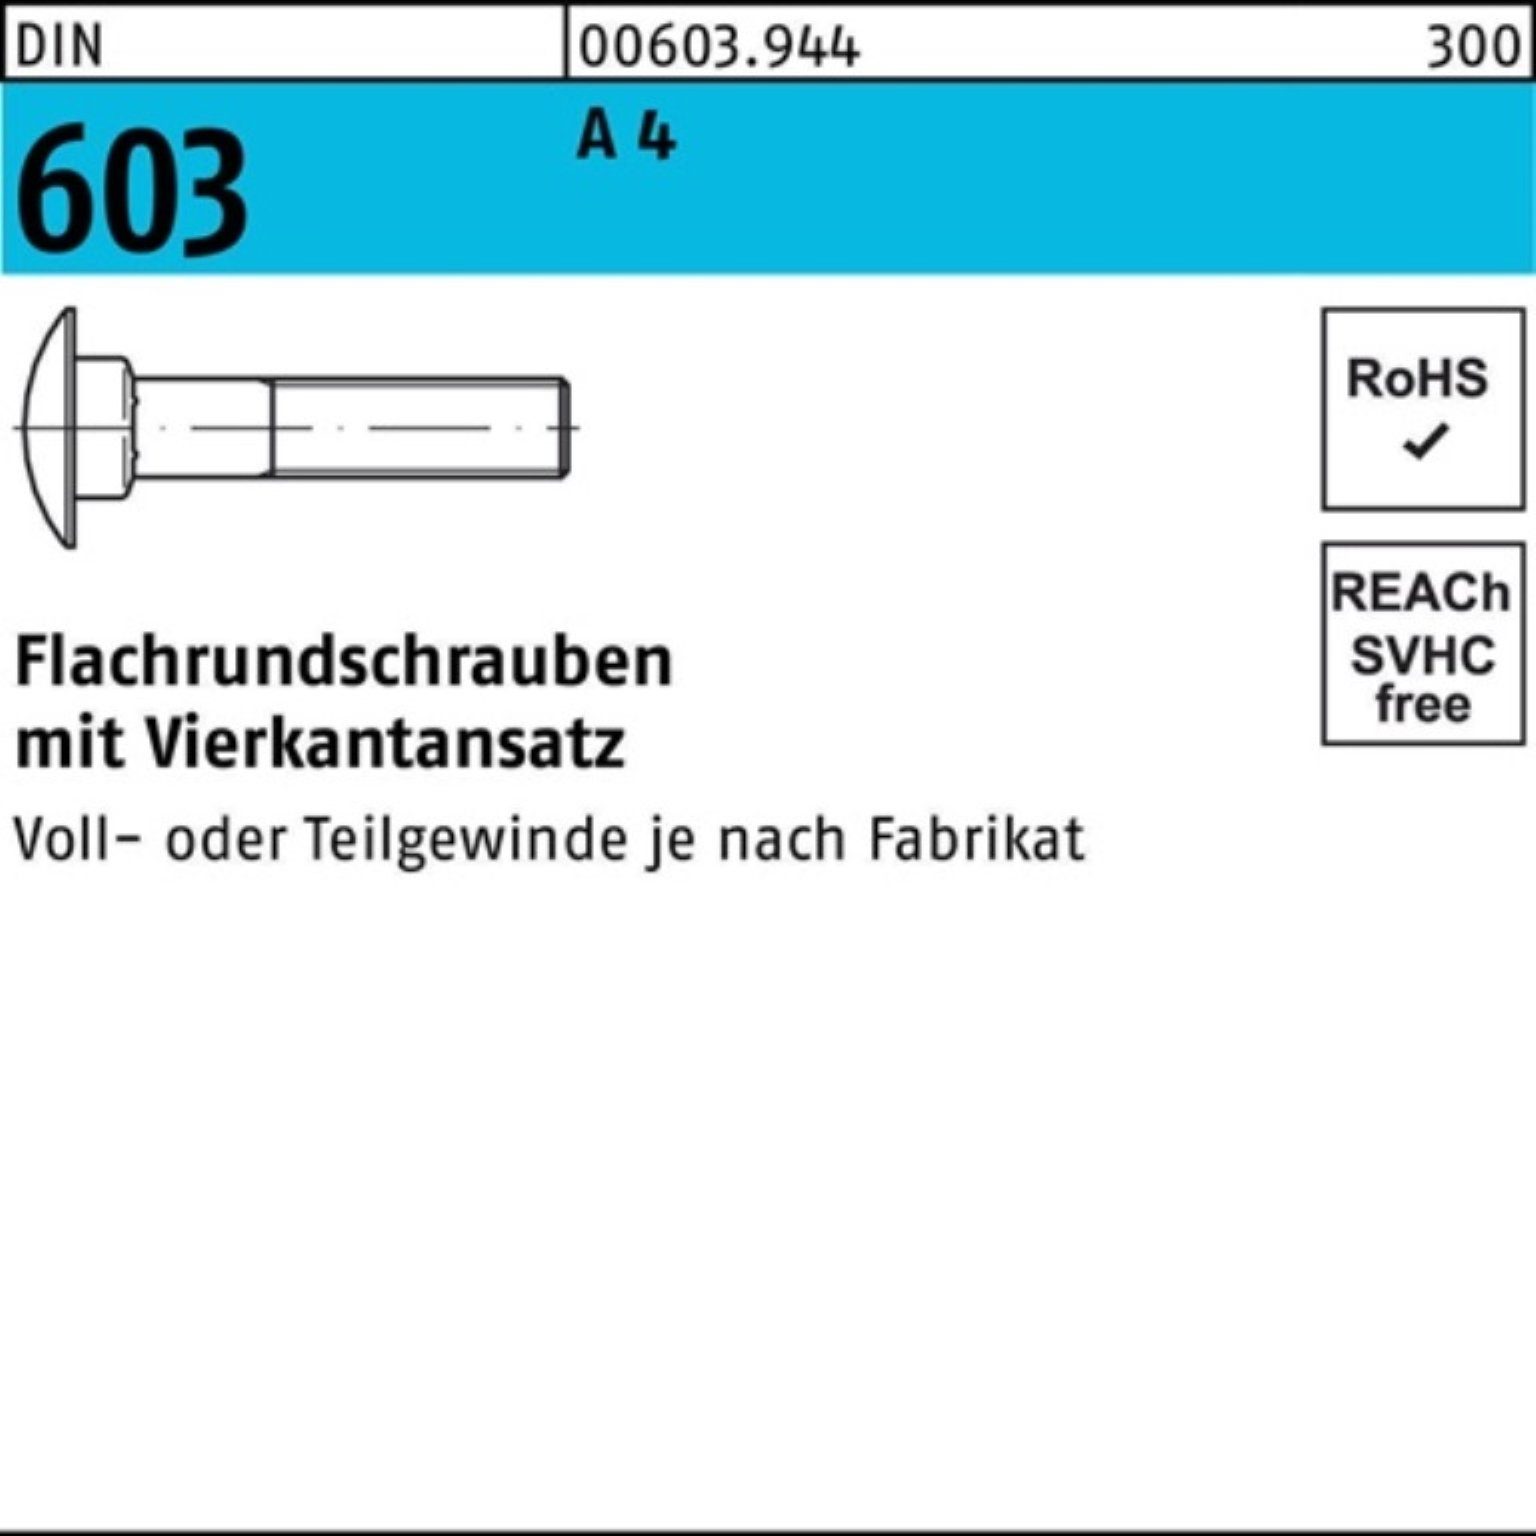 Pack 603 100 M6x 4 Schraube St DIN Flachrundschraube Vierkantansatz A 10 Reyher 100er